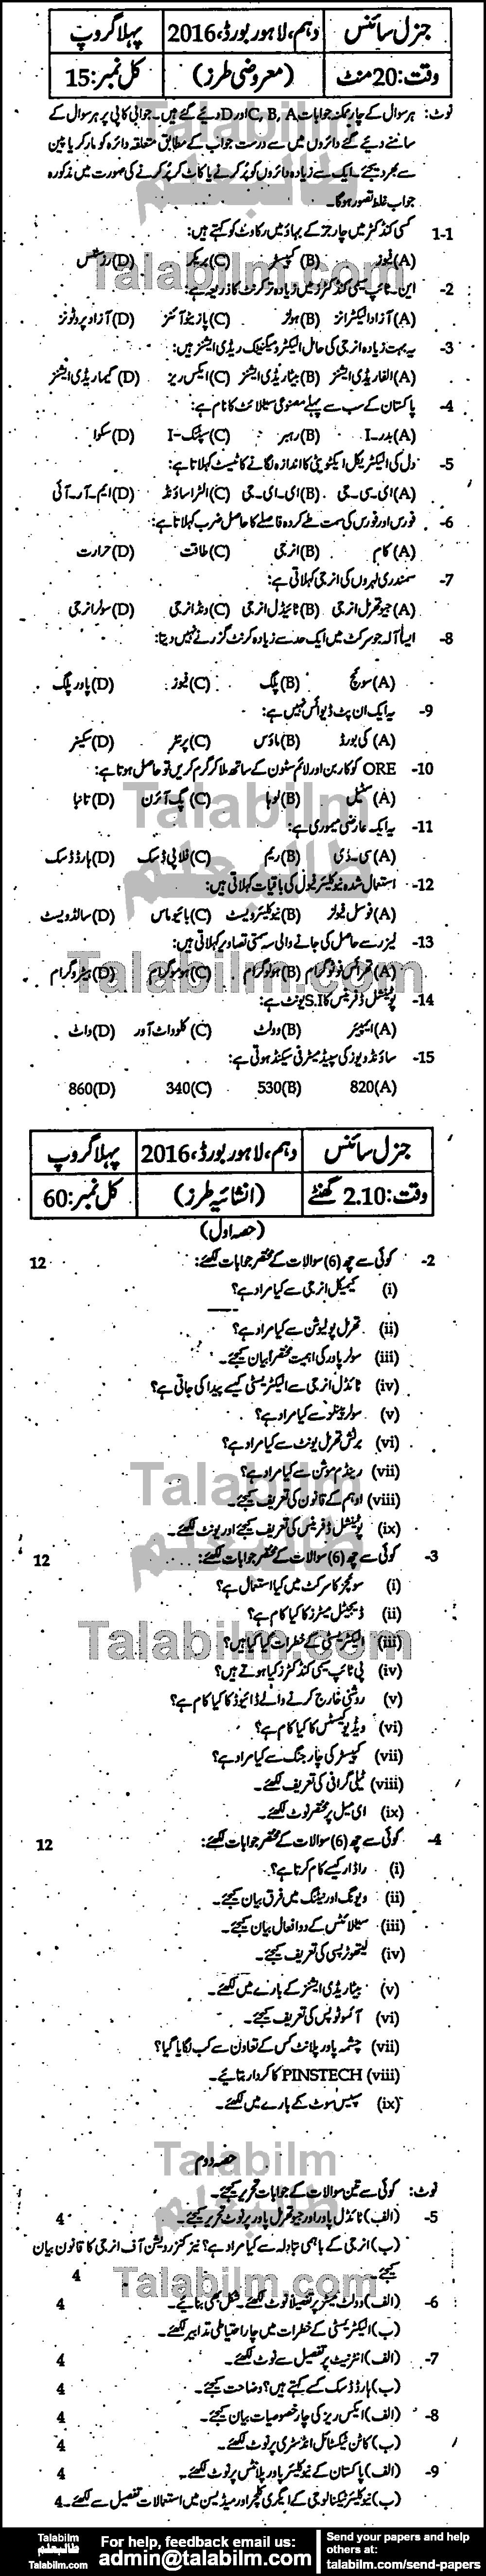 Science 0 past paper for Urdu Medium 2016 Group-I